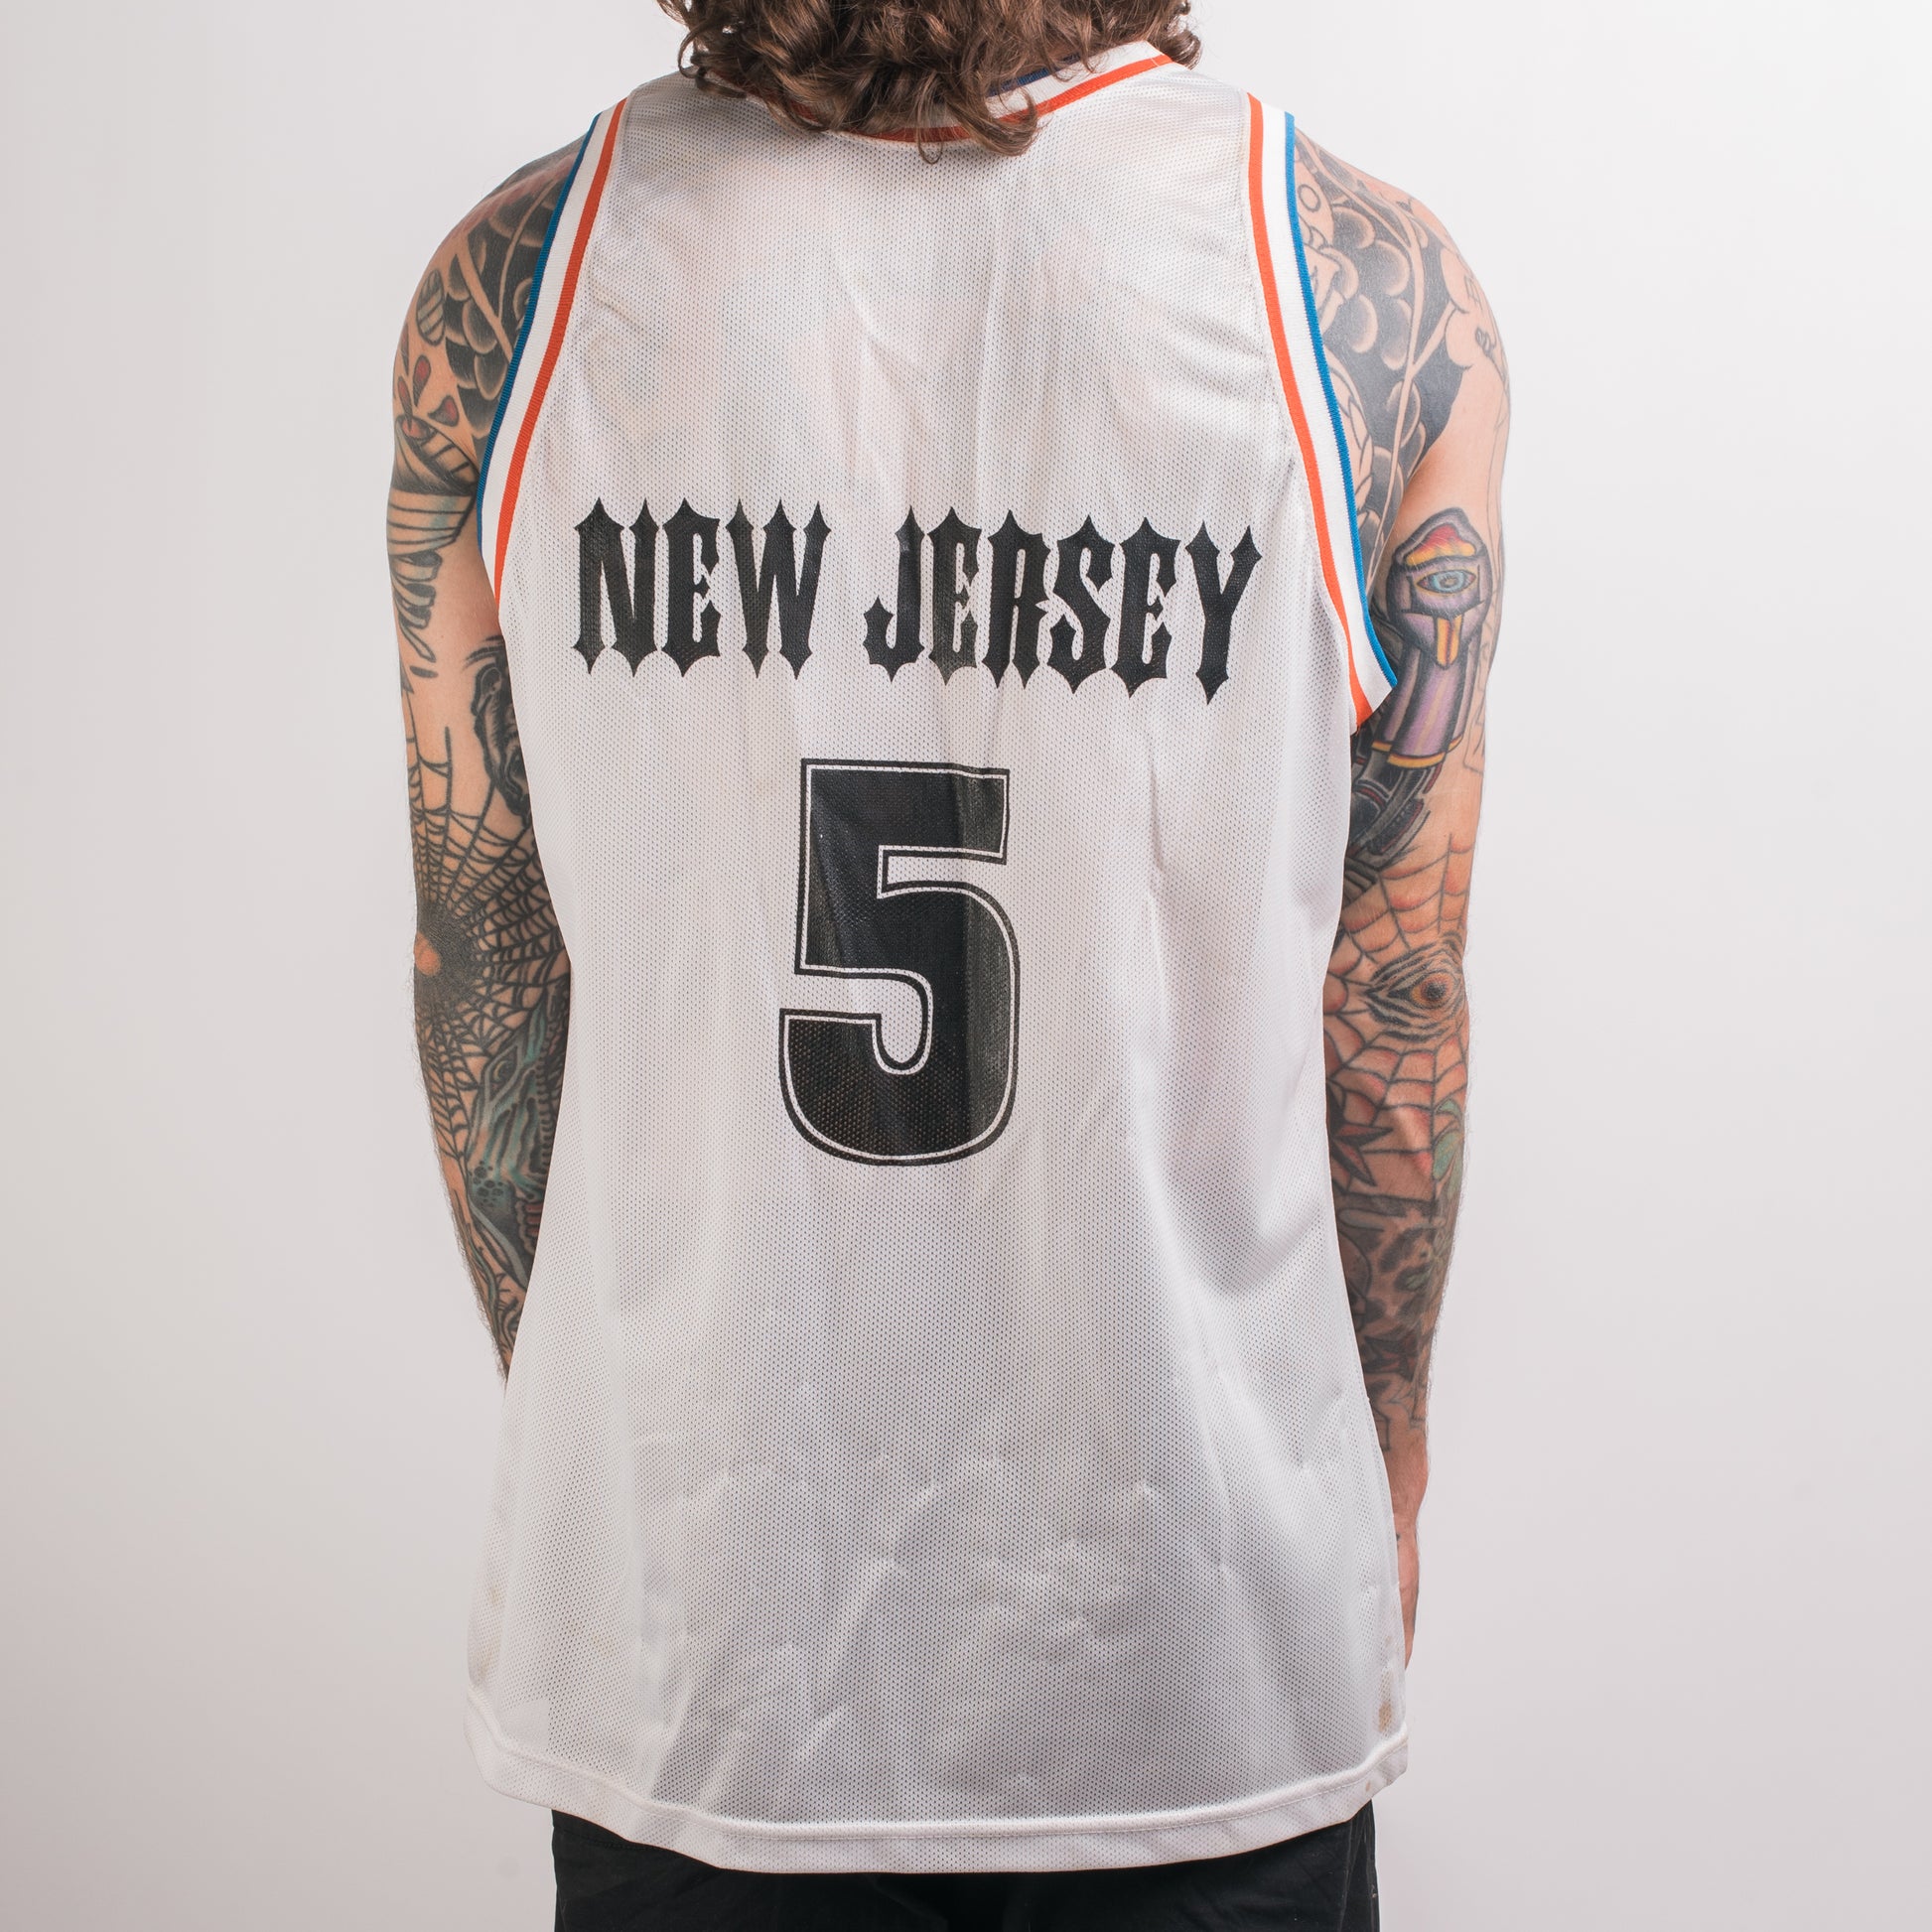 Champion New Jersey Nets NBA Jerseys for sale